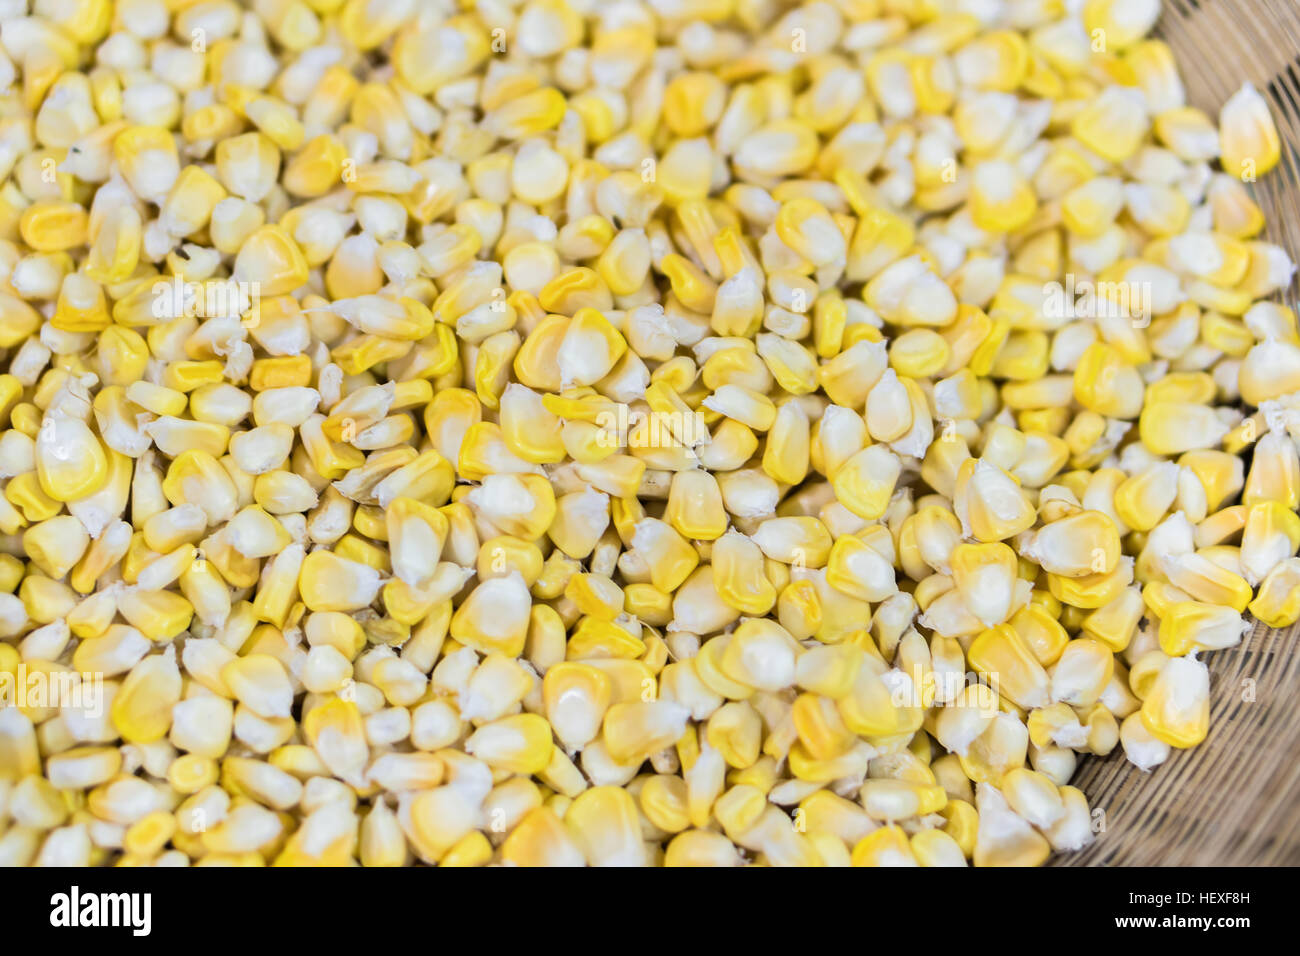 Bulk of yellow corn grains texture Stock Photo